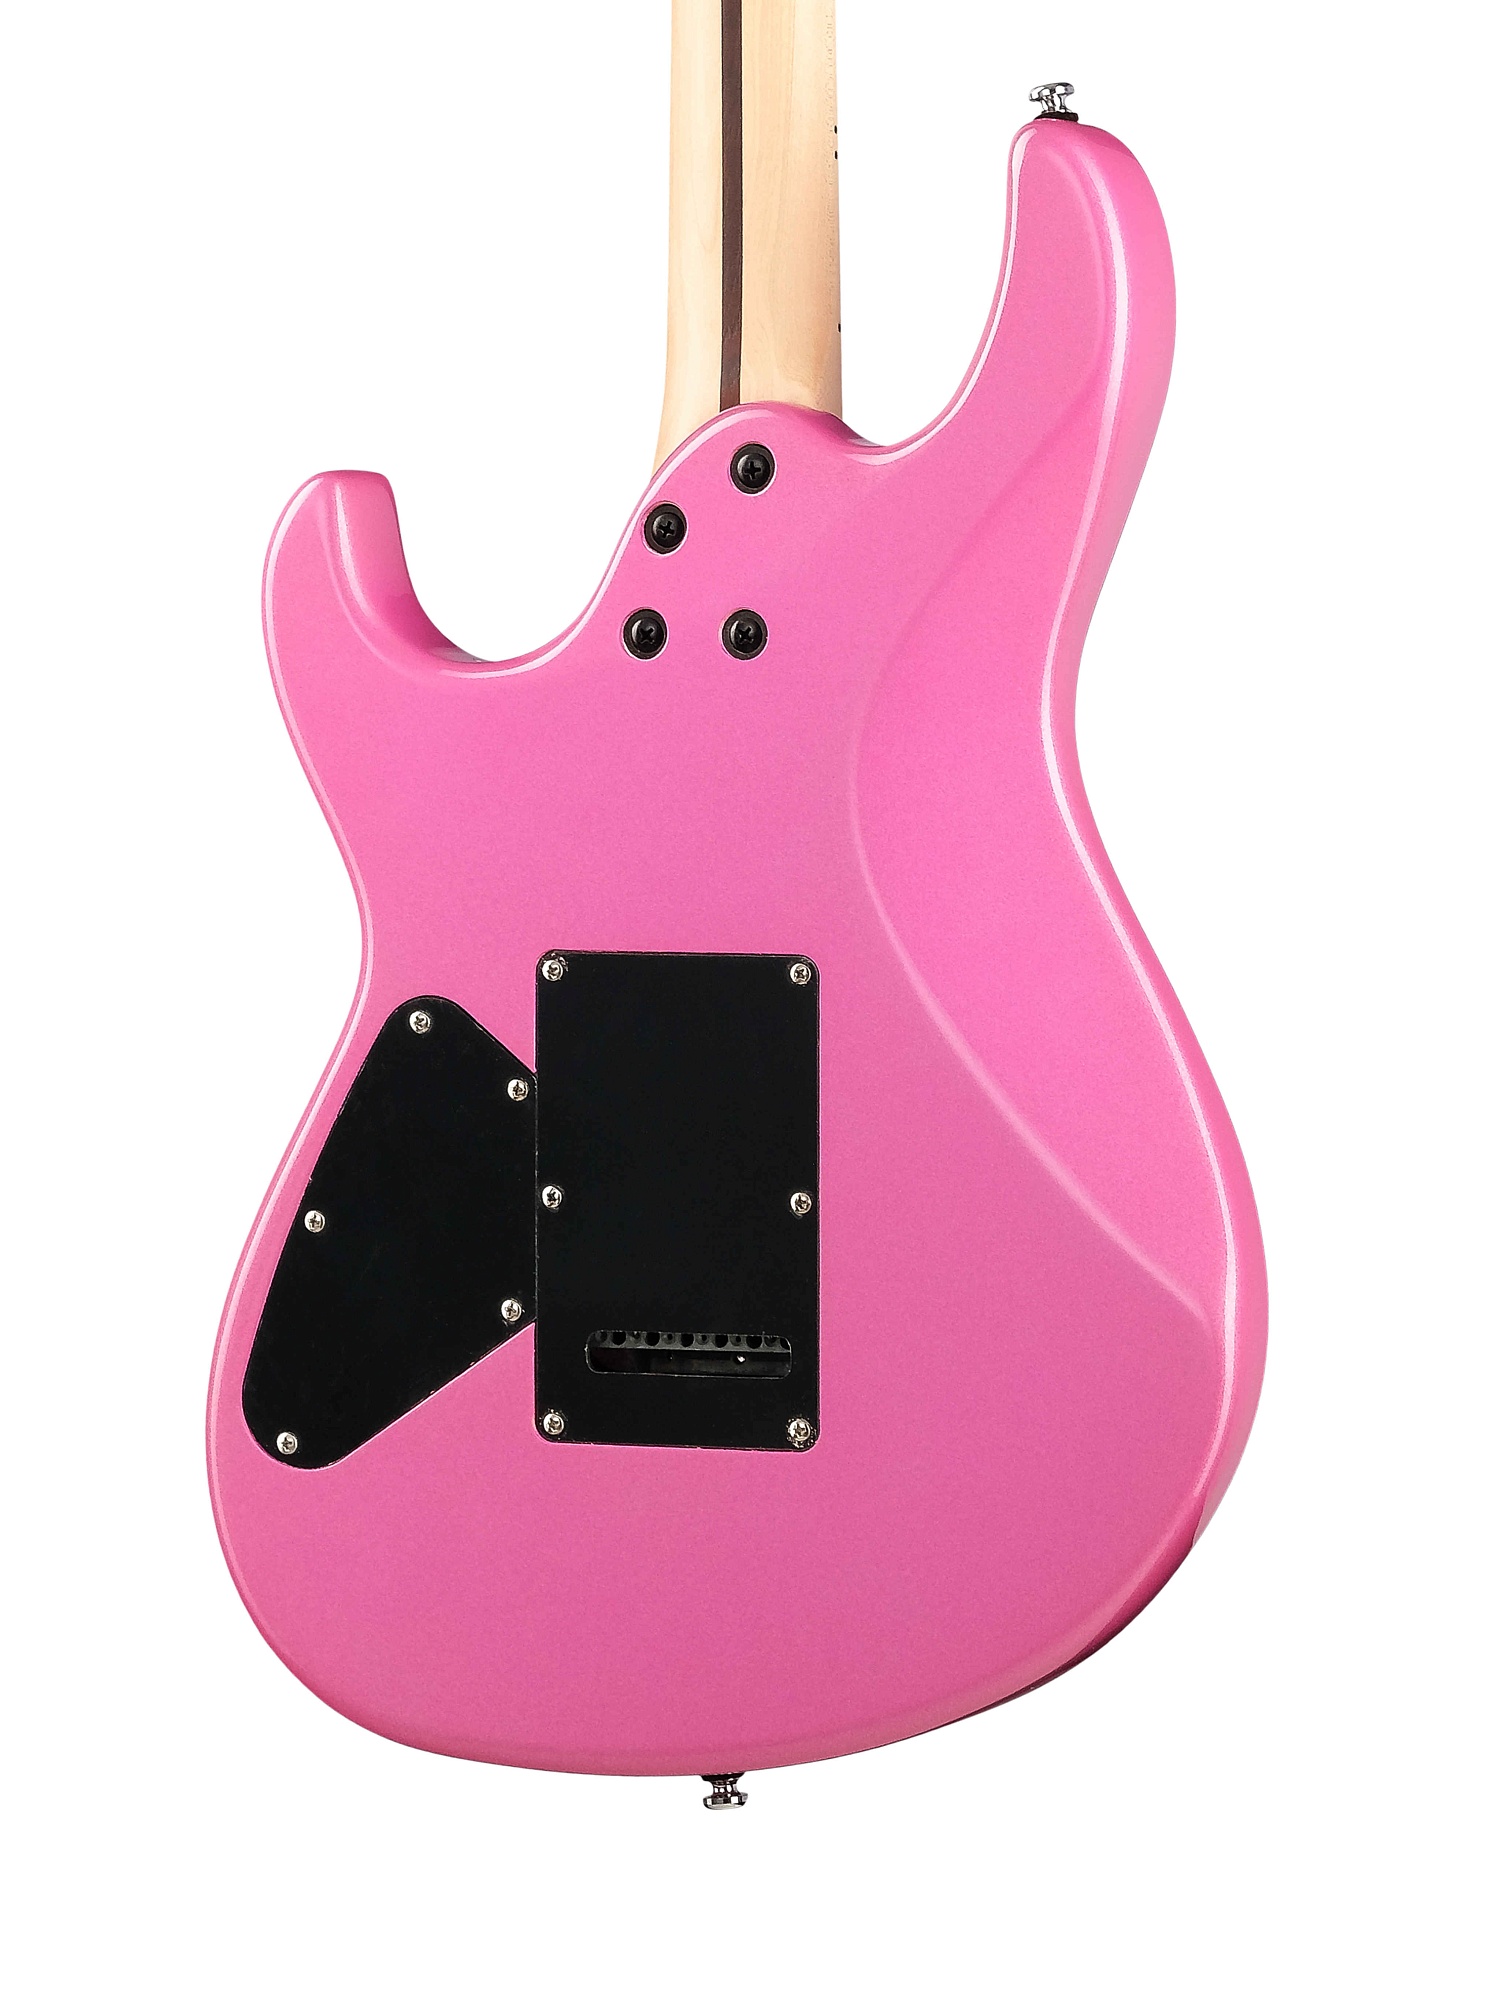 G250-Spectrum-WBAG-MPU G Series Электрогитара, розовая, с чехлом, Cort купить в prostore.me